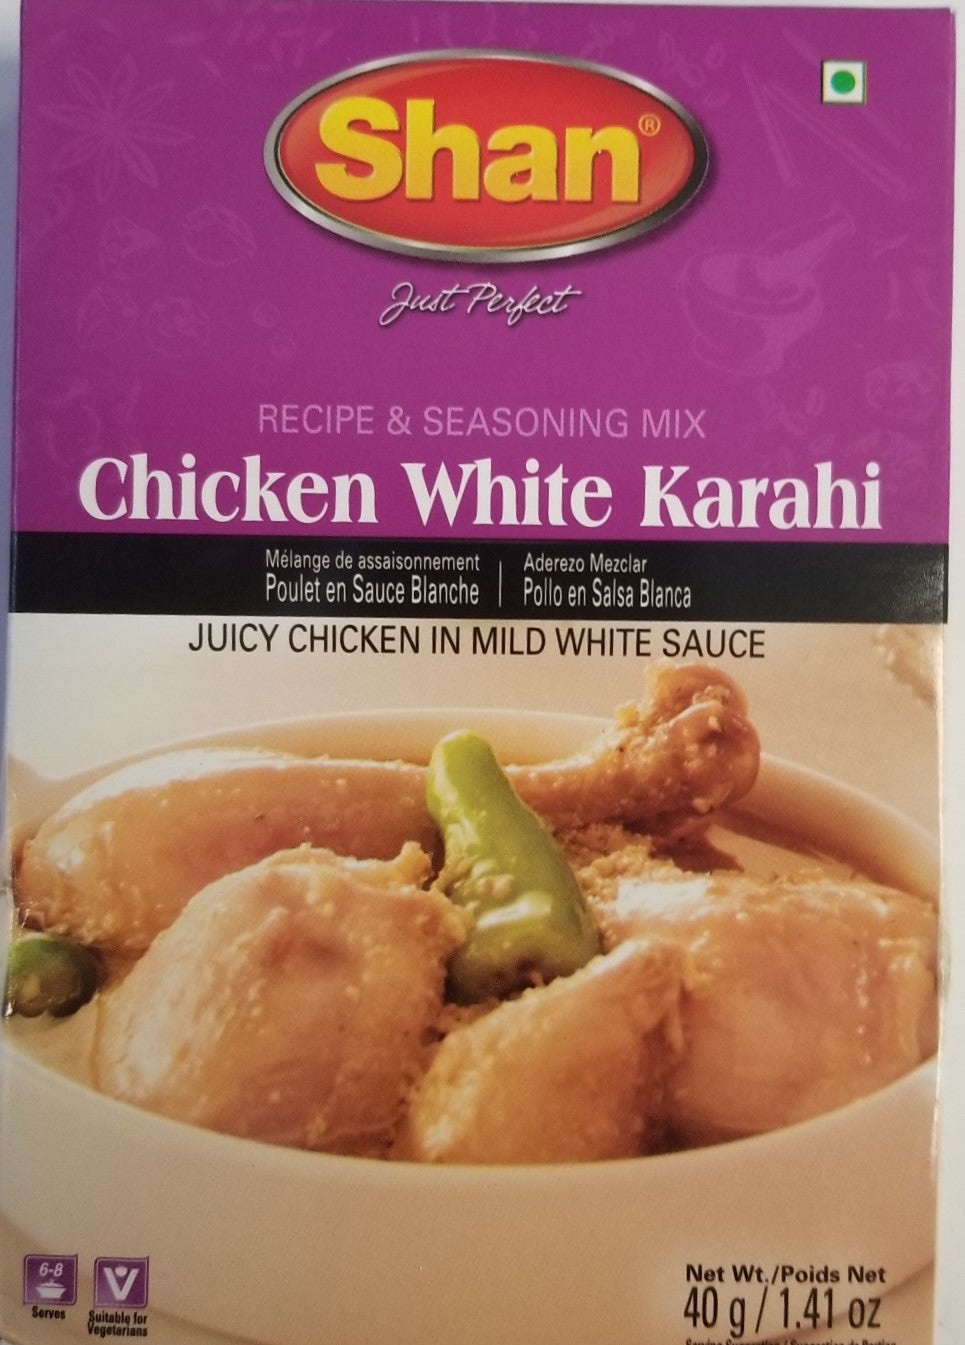 Shan Chicken White Karahi 40g